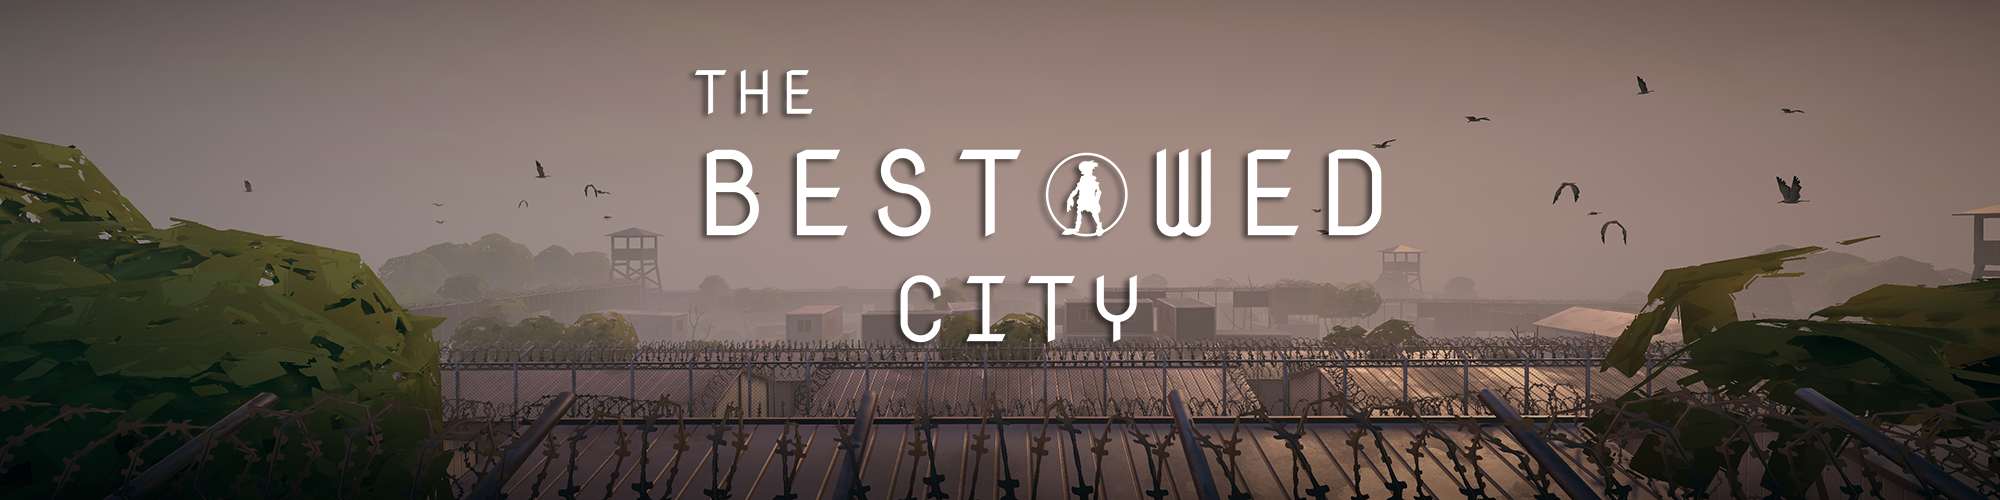 The Bestowed City